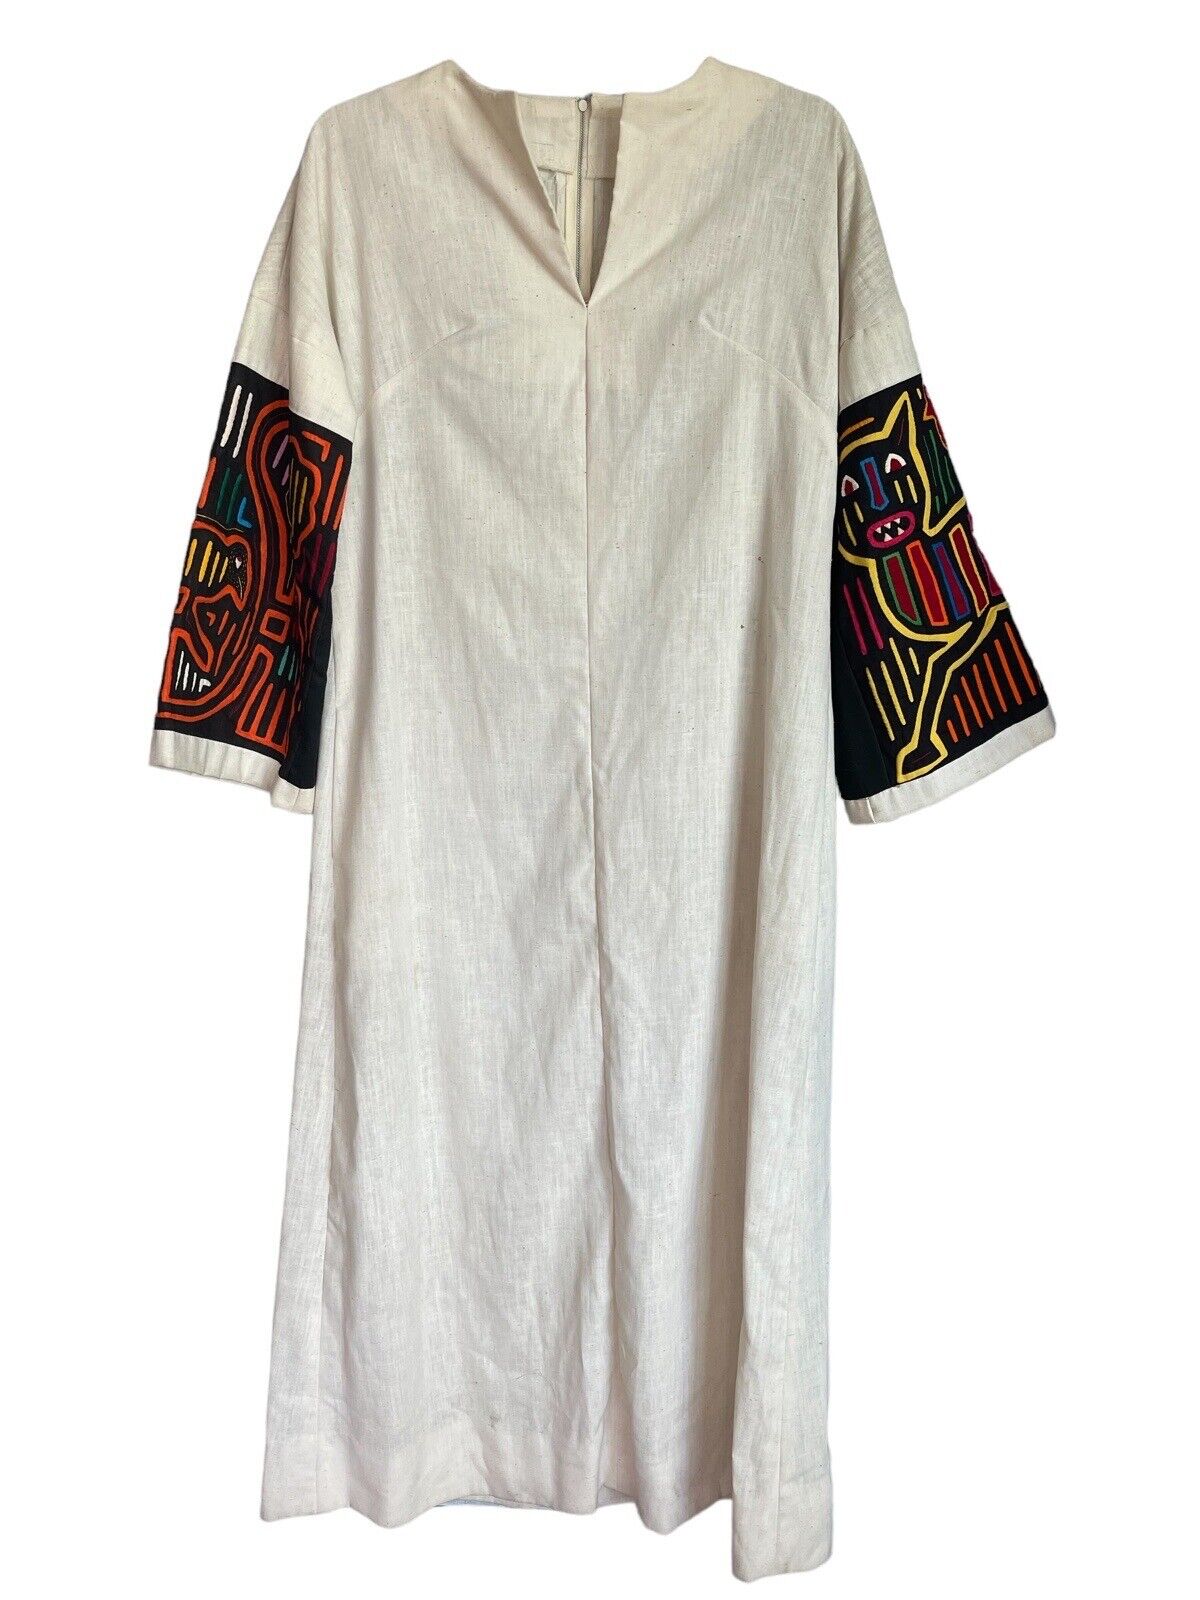 Kuna Indian Mola Dress Panama San Blas Long Cream Dress Mola Sleeves Med  READ